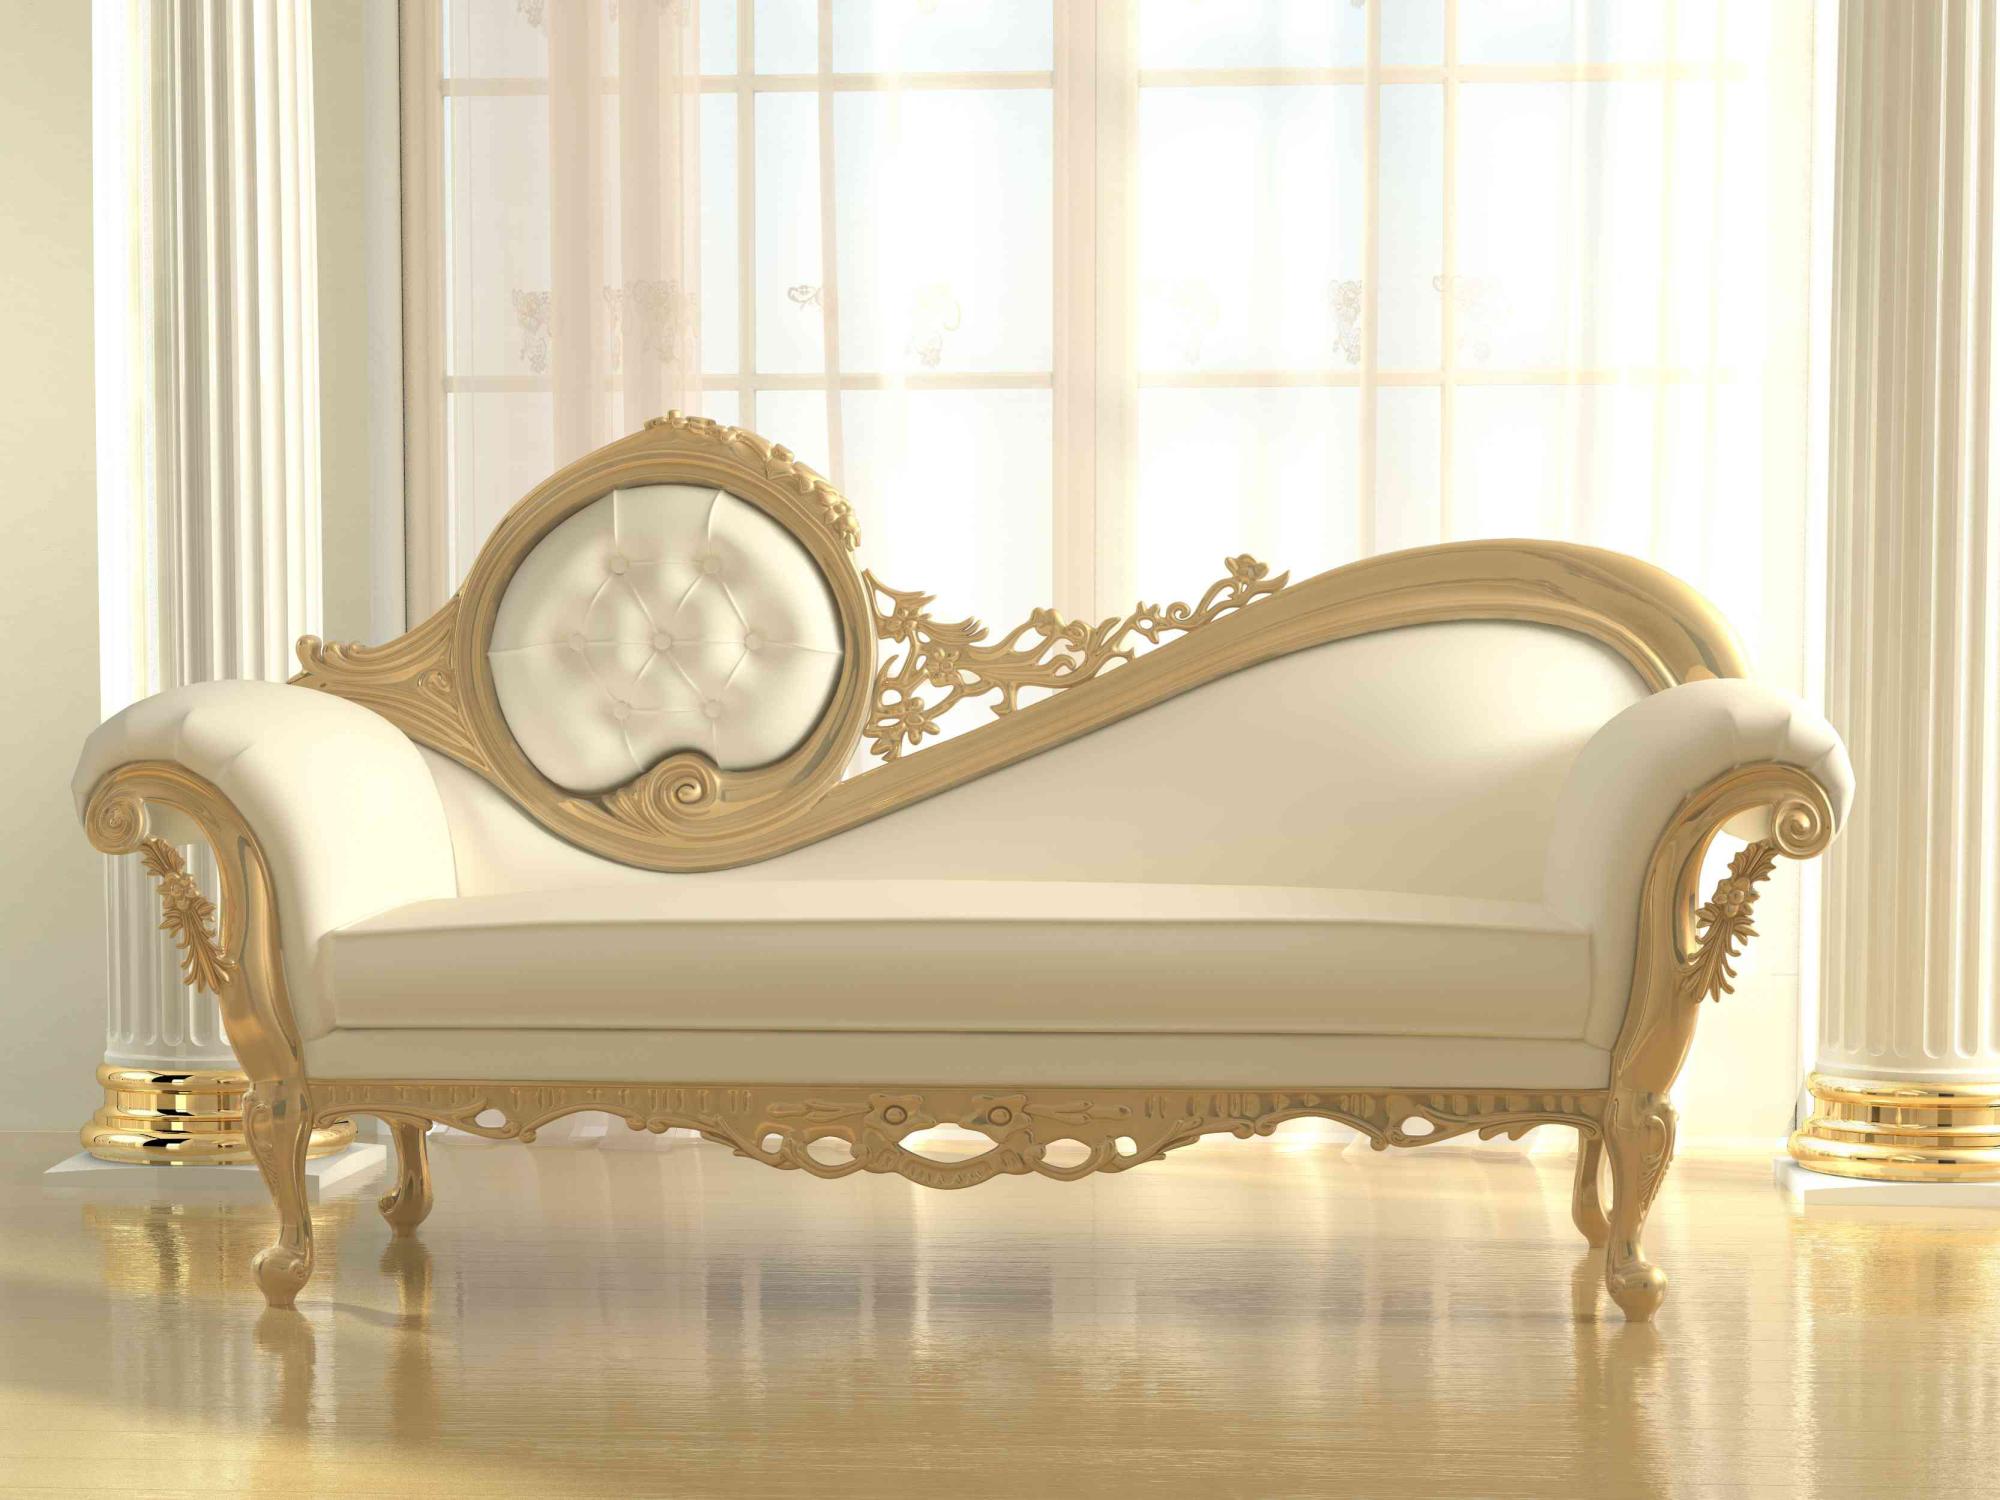 Luxurious sofa in modern interior apartment